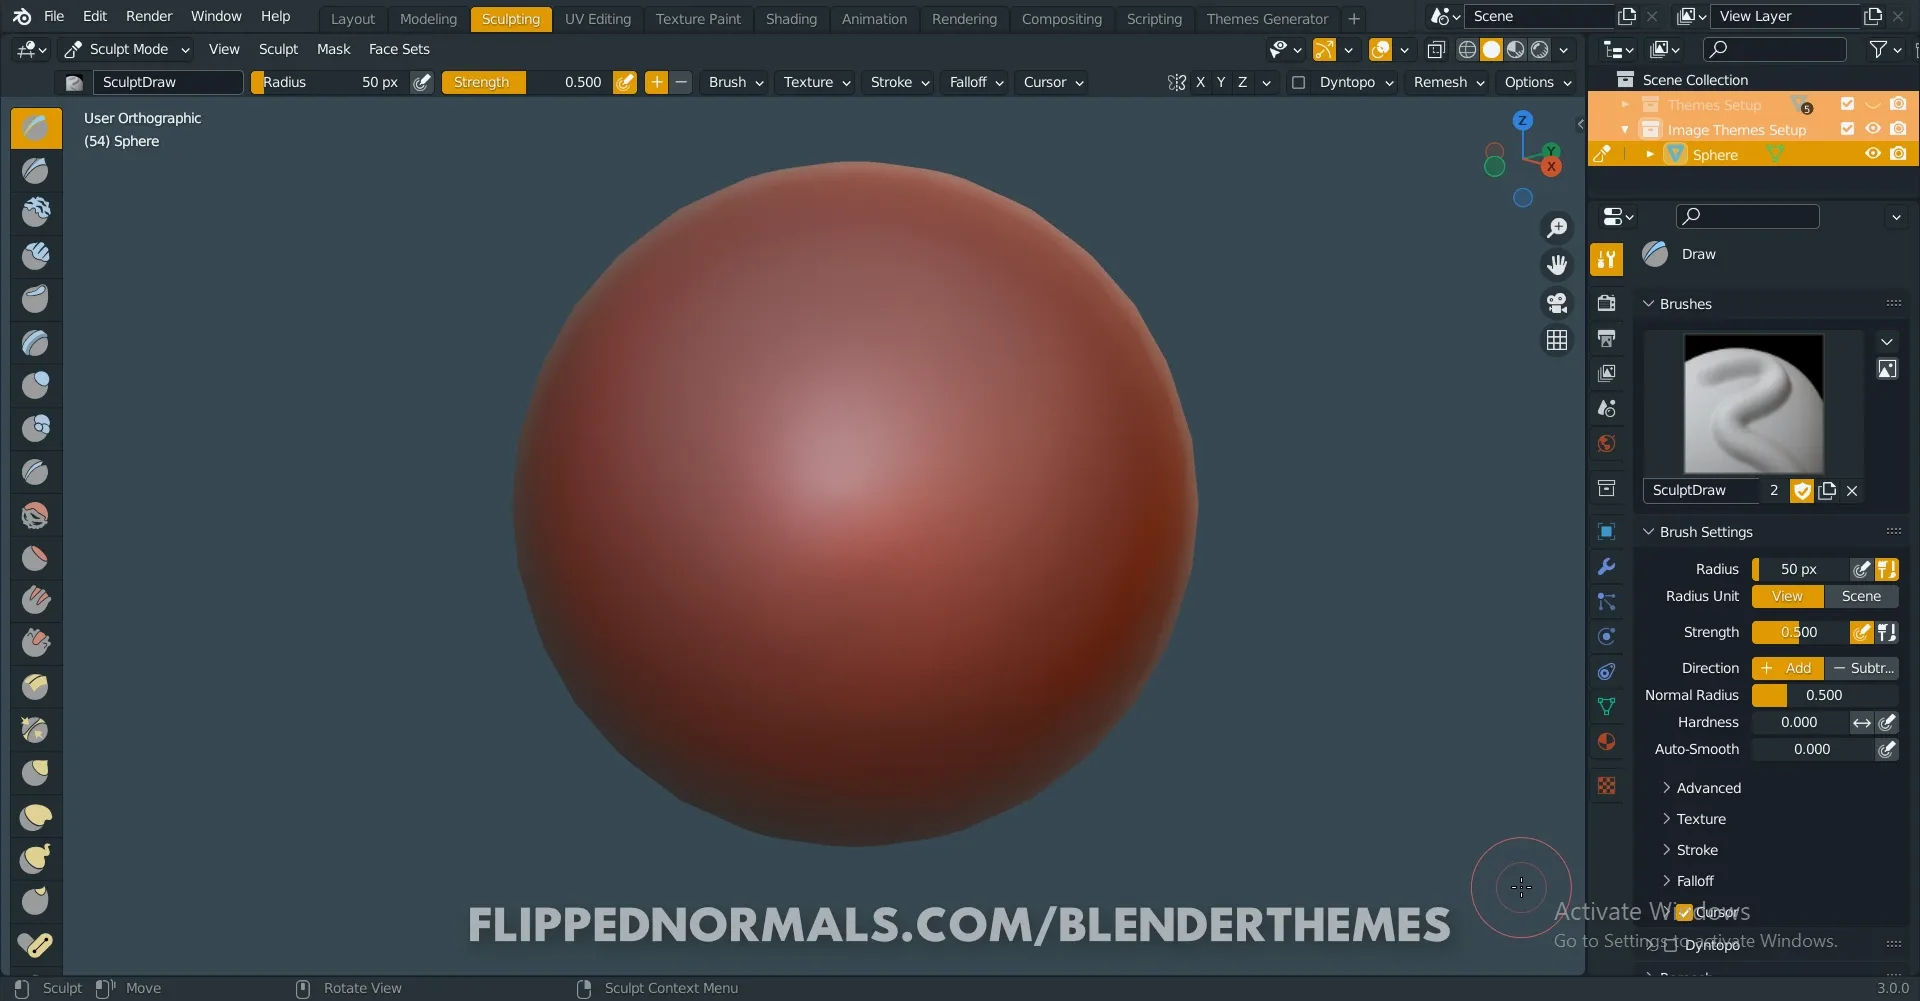 Blender Themes 0001